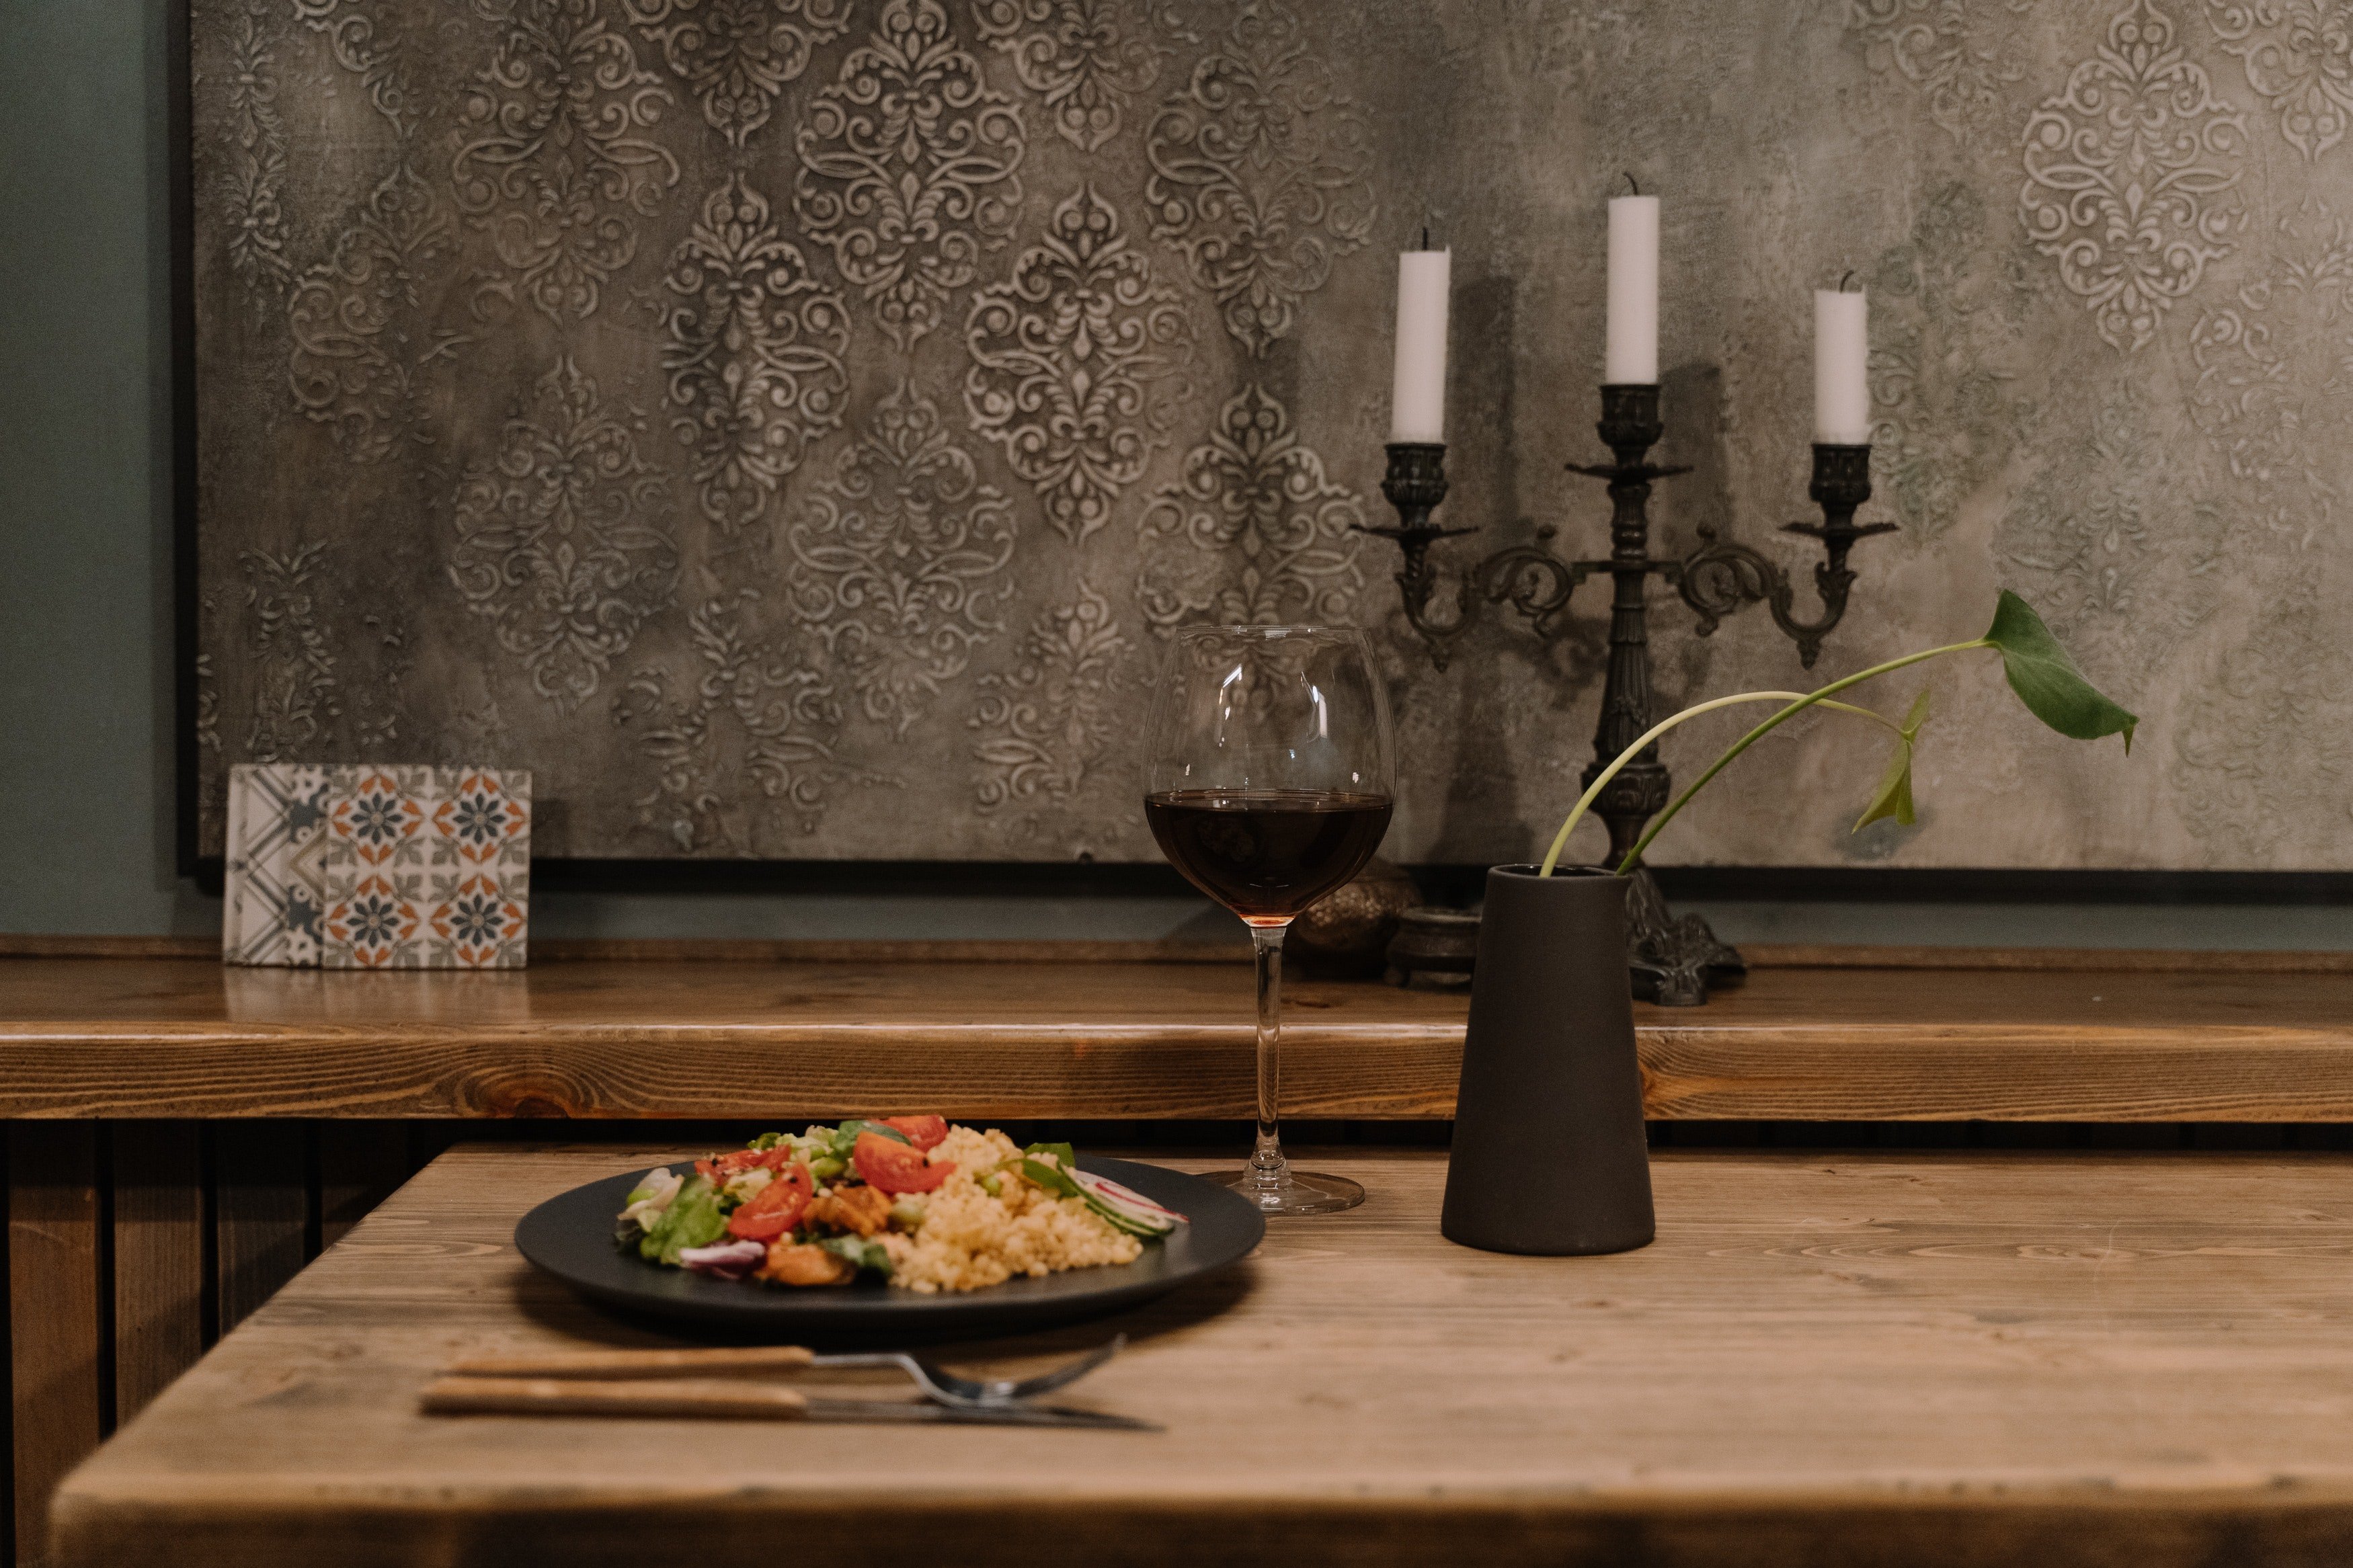 Plato de comida servido junto a una copa de vino. | Foto: Pexels